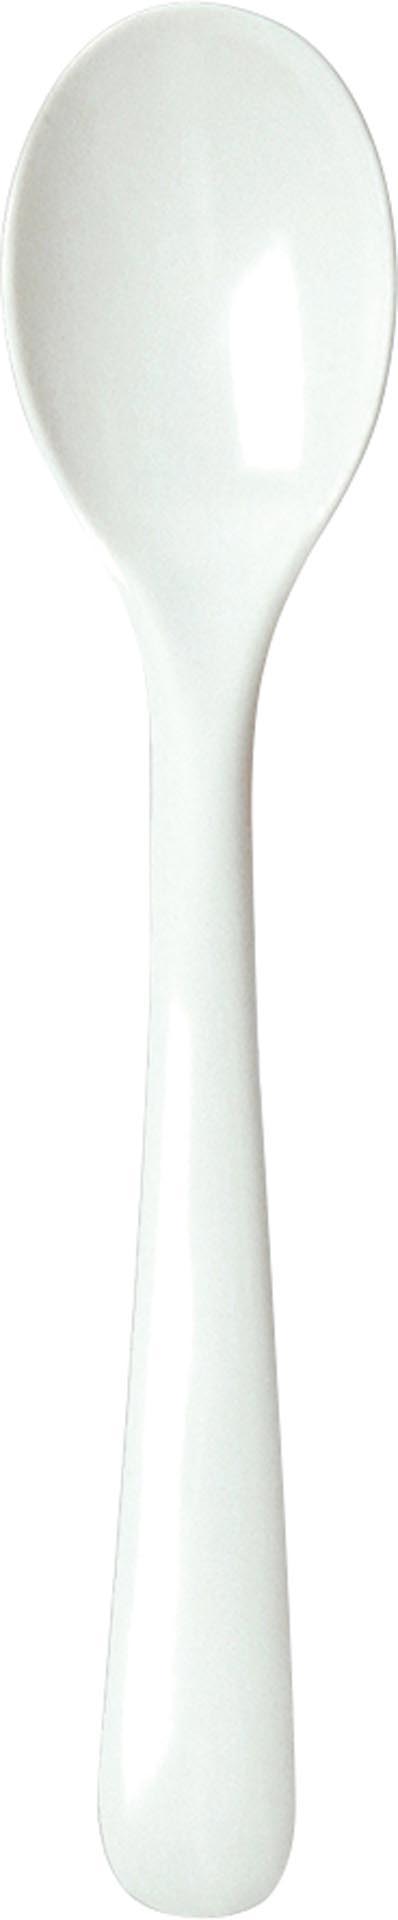 Eierlöffel 12 cm weiß Melamin 25er Pack